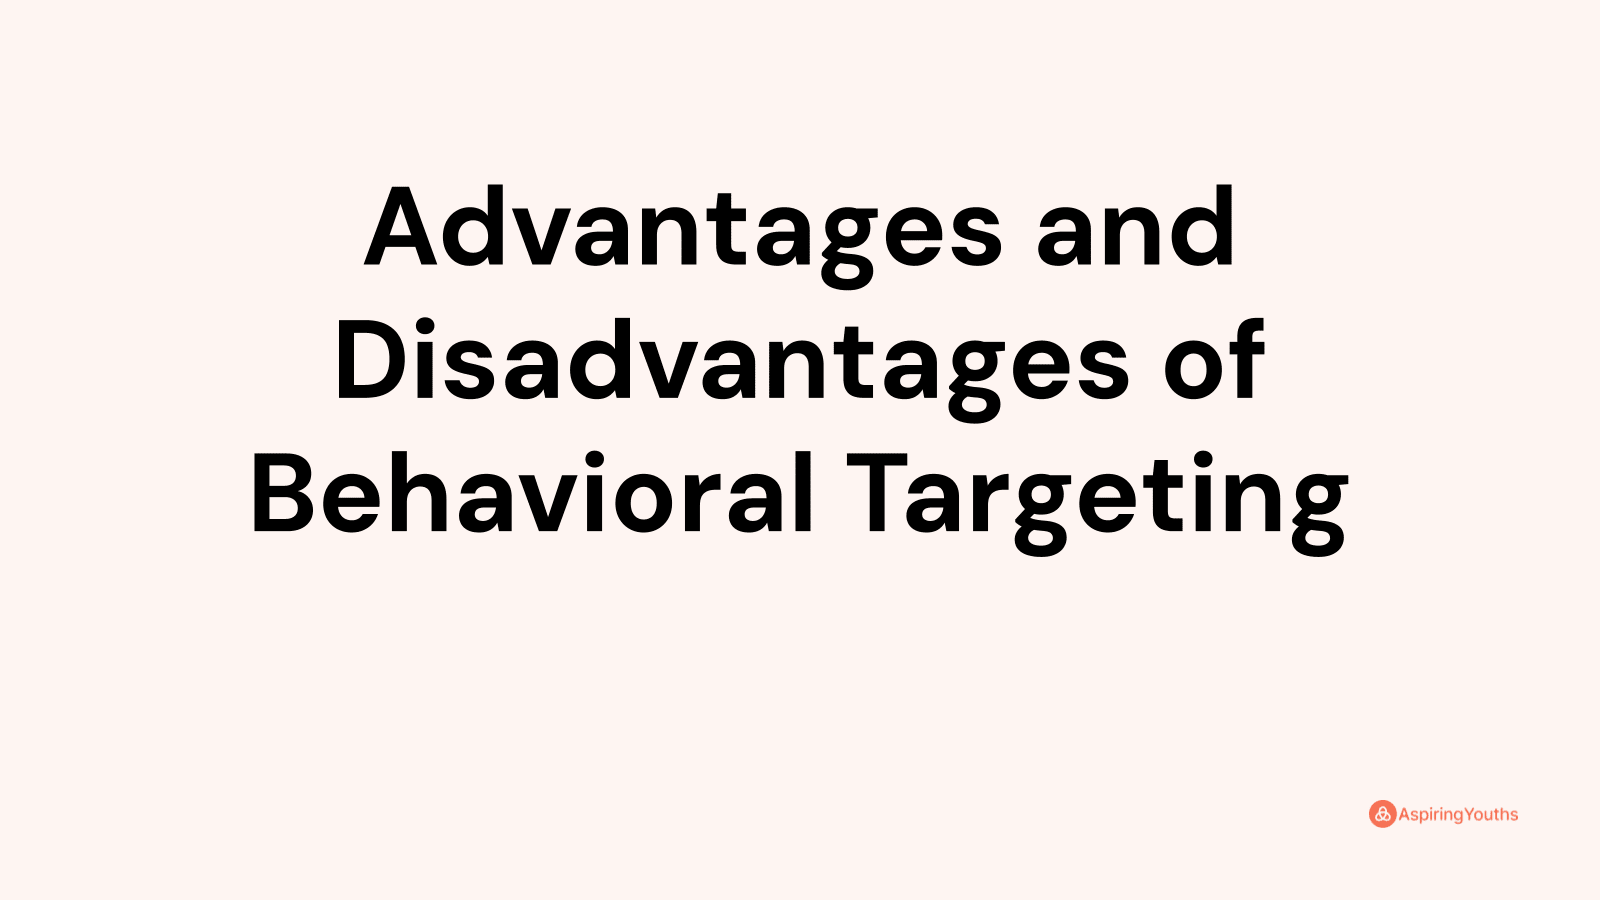 Advantages and disadvantages of Behavioral Targeting